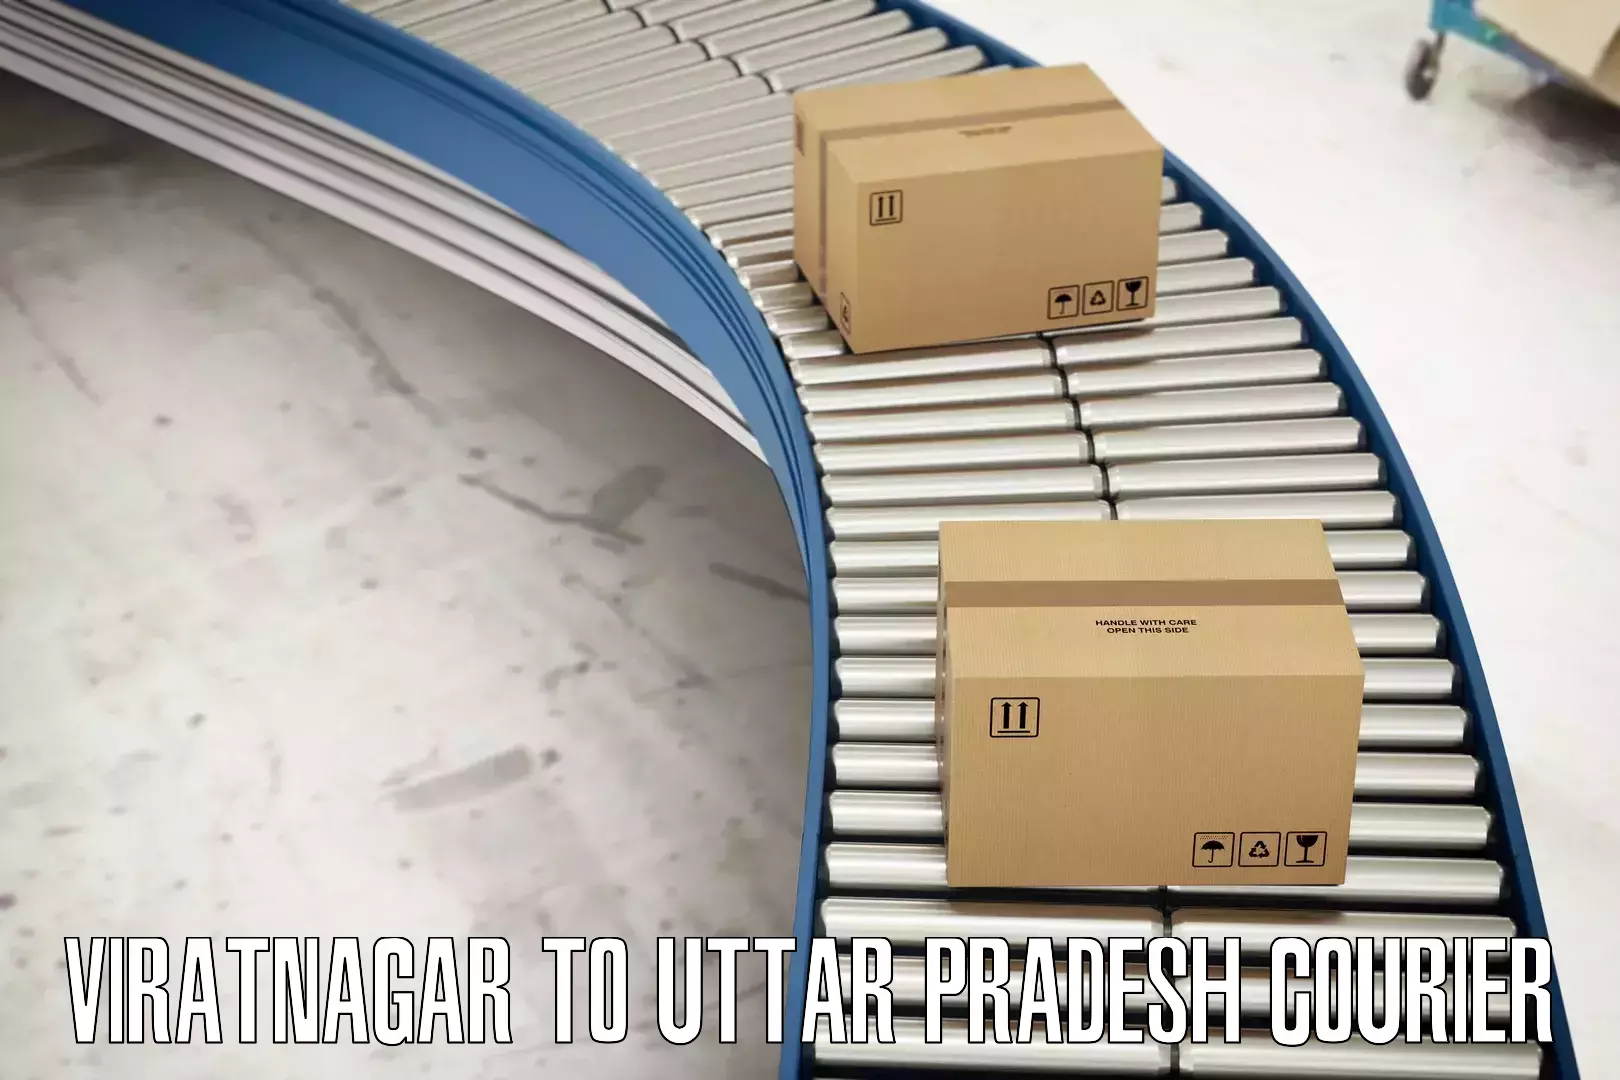 Enhanced tracking features Viratnagar to Gangoh